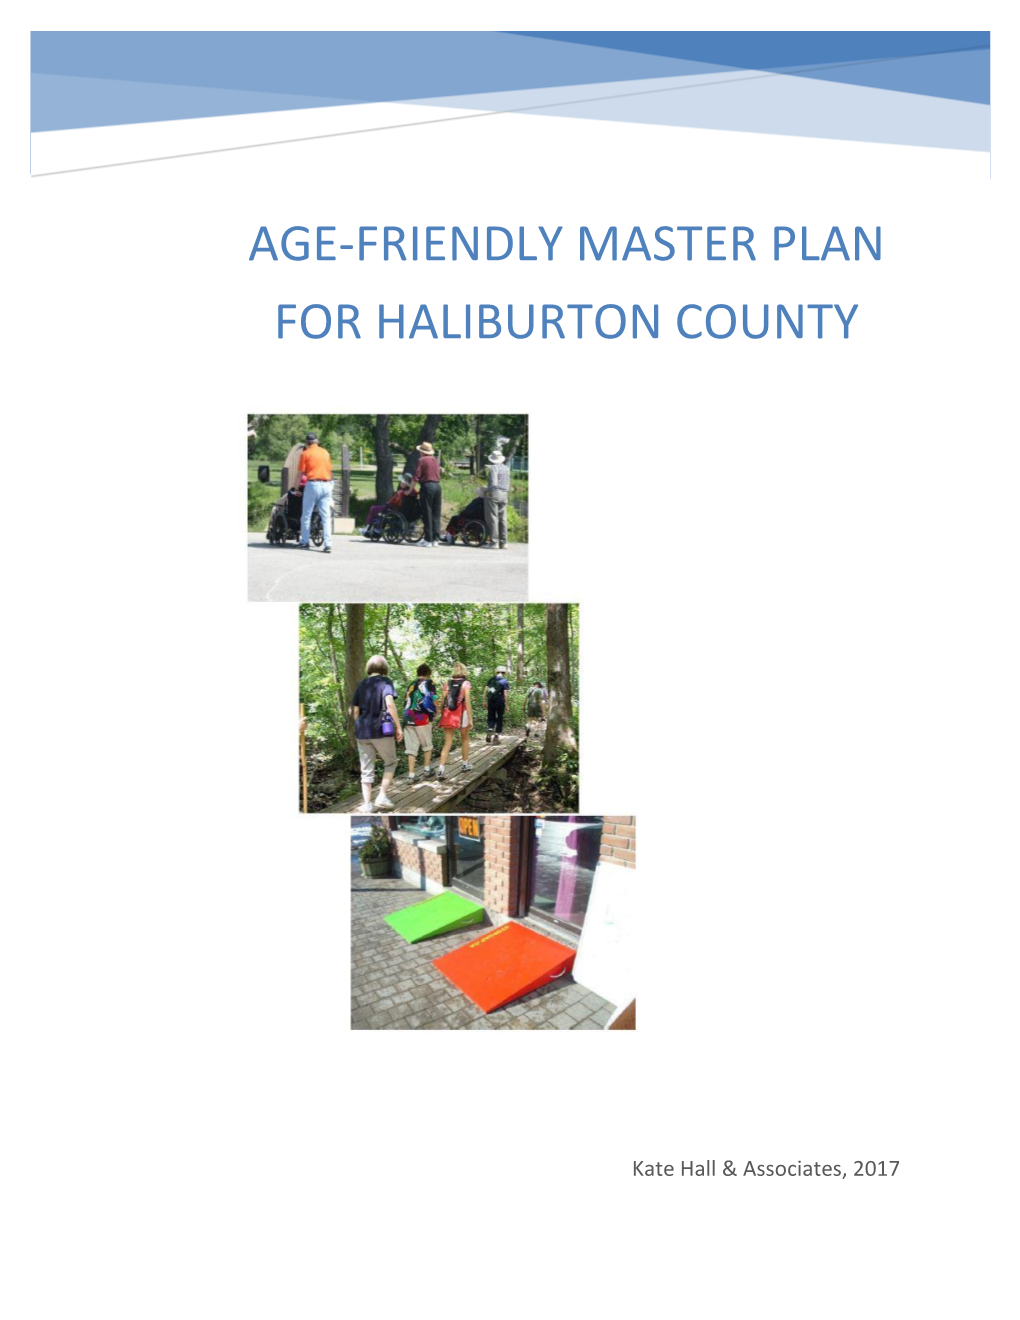 Age-Friendly Master Plan for Haliburton County